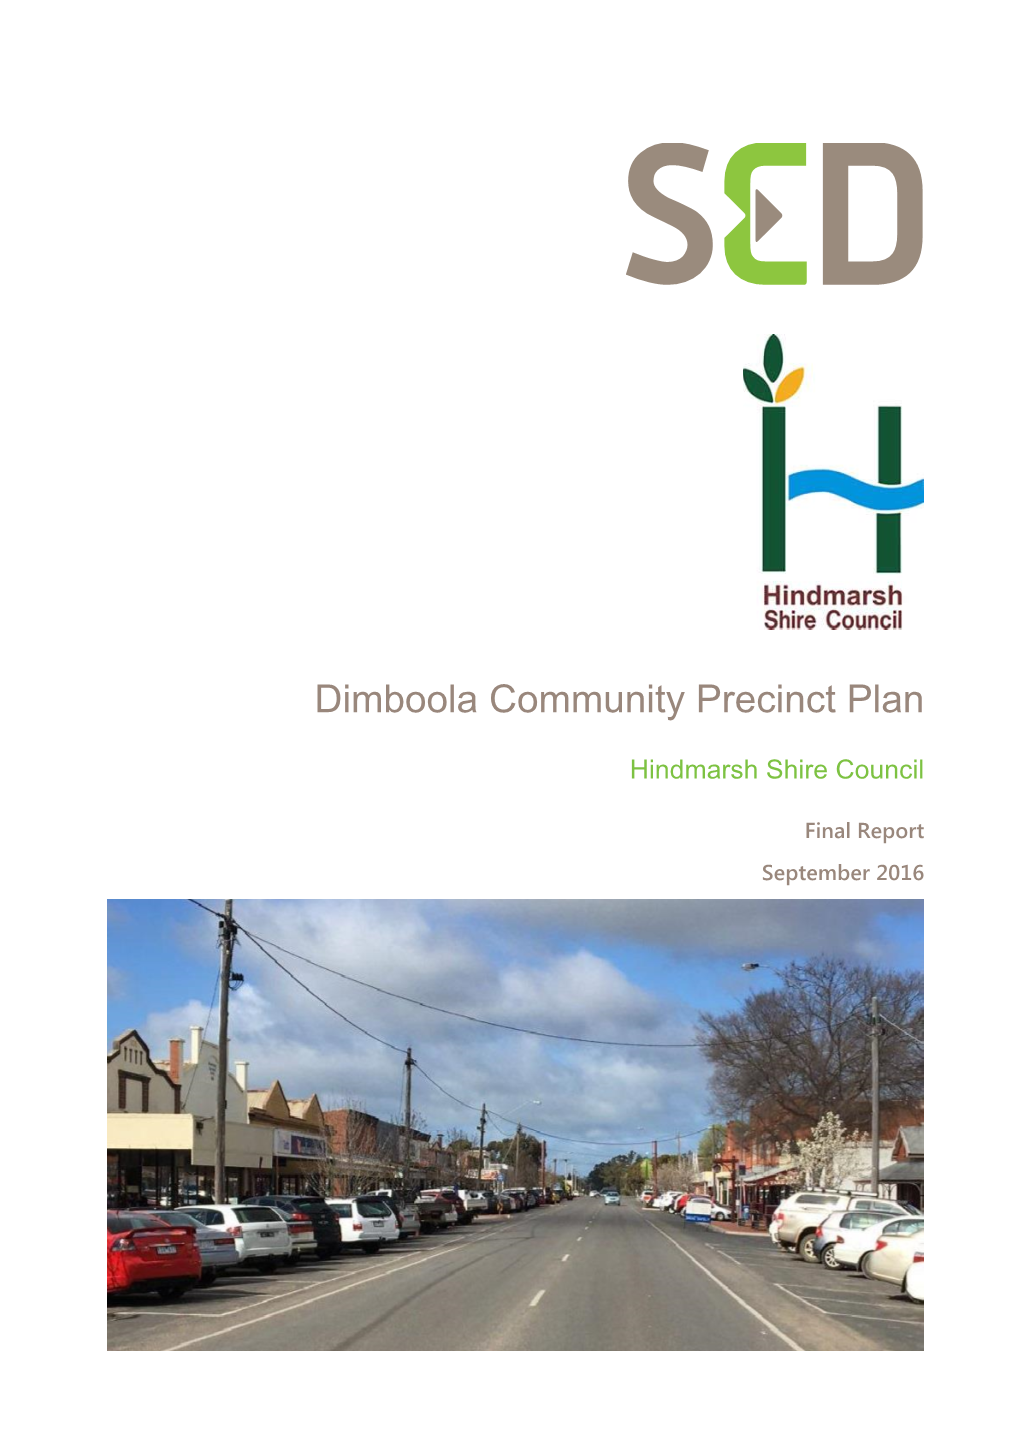 Dimboola Community Precinct Plan 2016